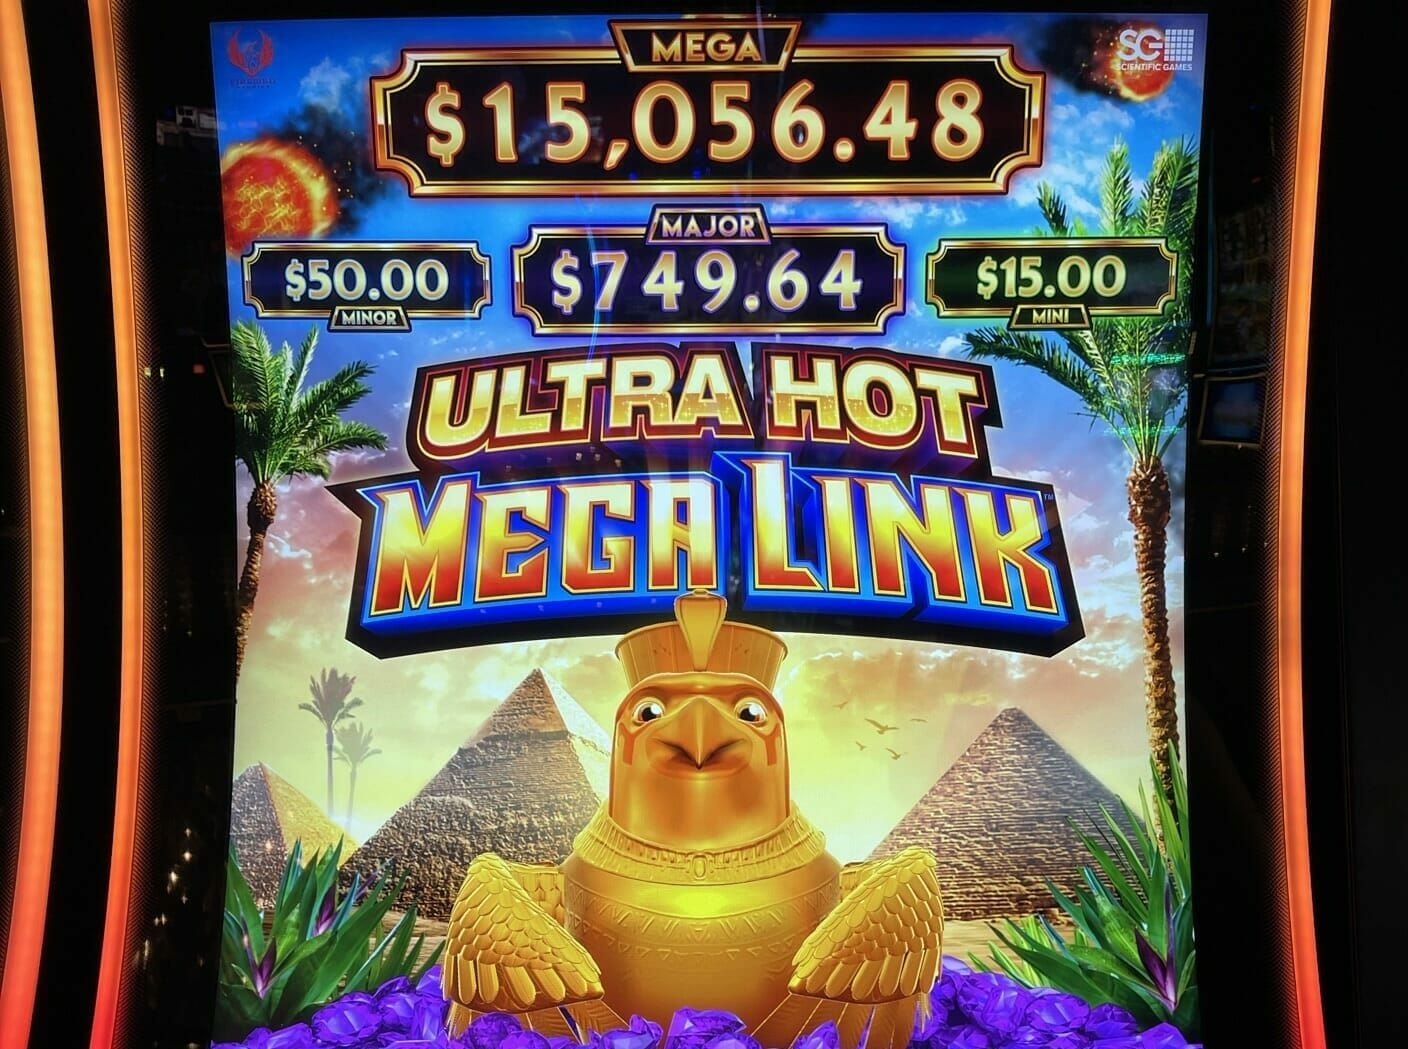 online casino real money texas